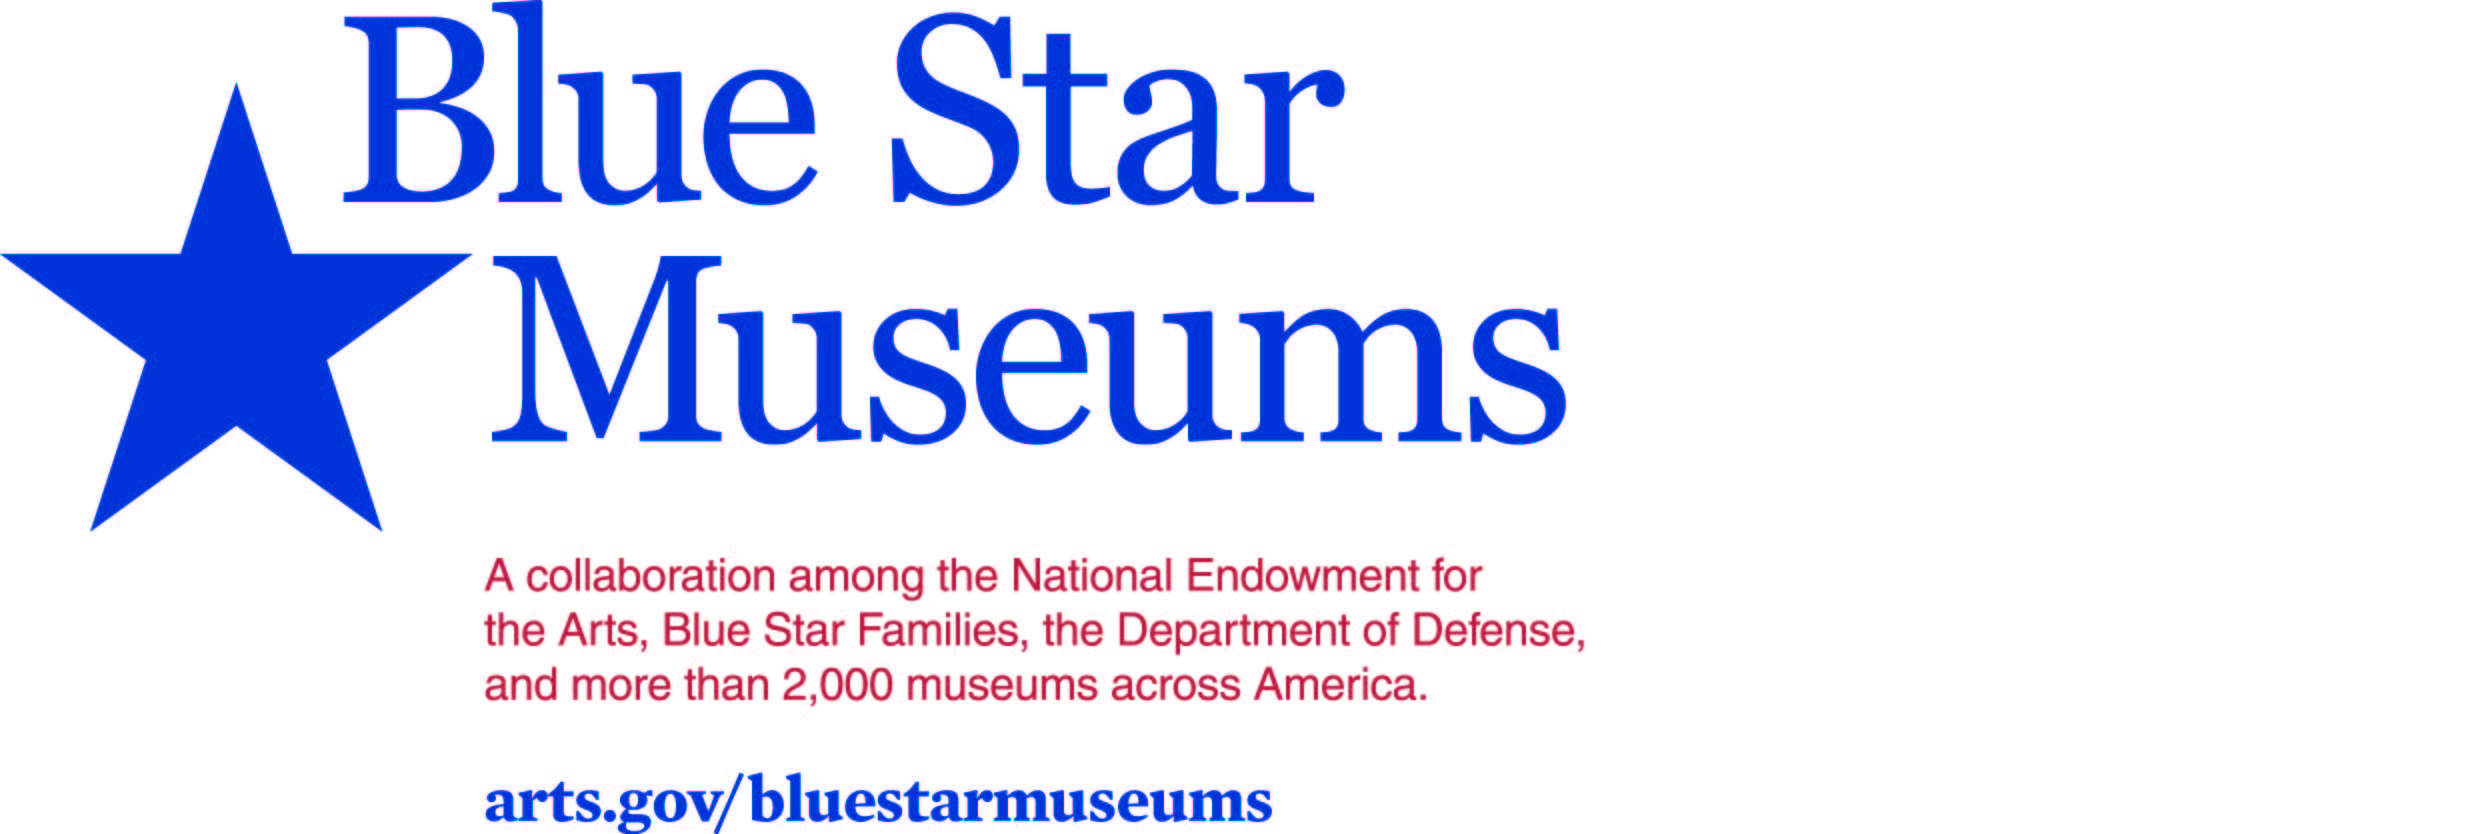 Blue Star Museums PR Toolkit & Marketing Materials | NEA